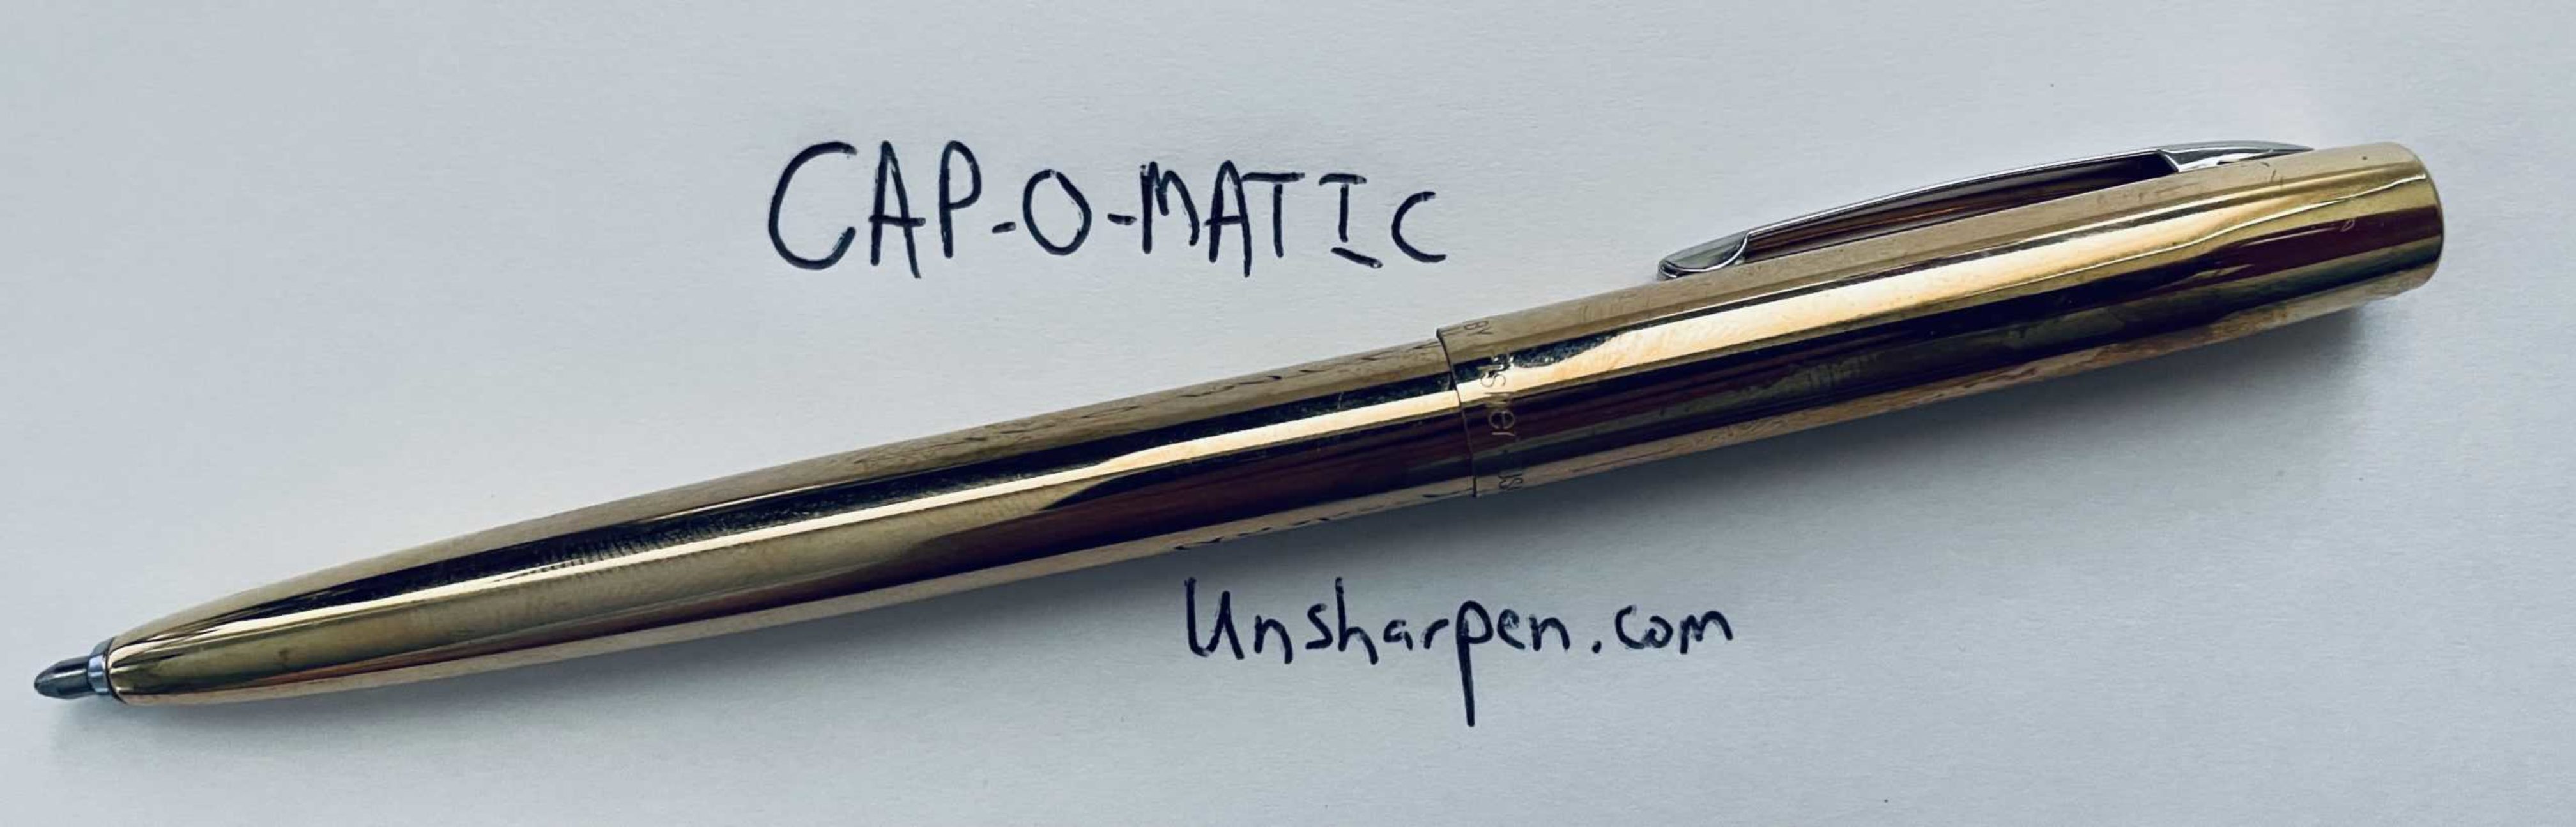 Fisher Space Pen Black & Brass Cap-O-Matic Ballpoint Pen NEW S251G-BK 